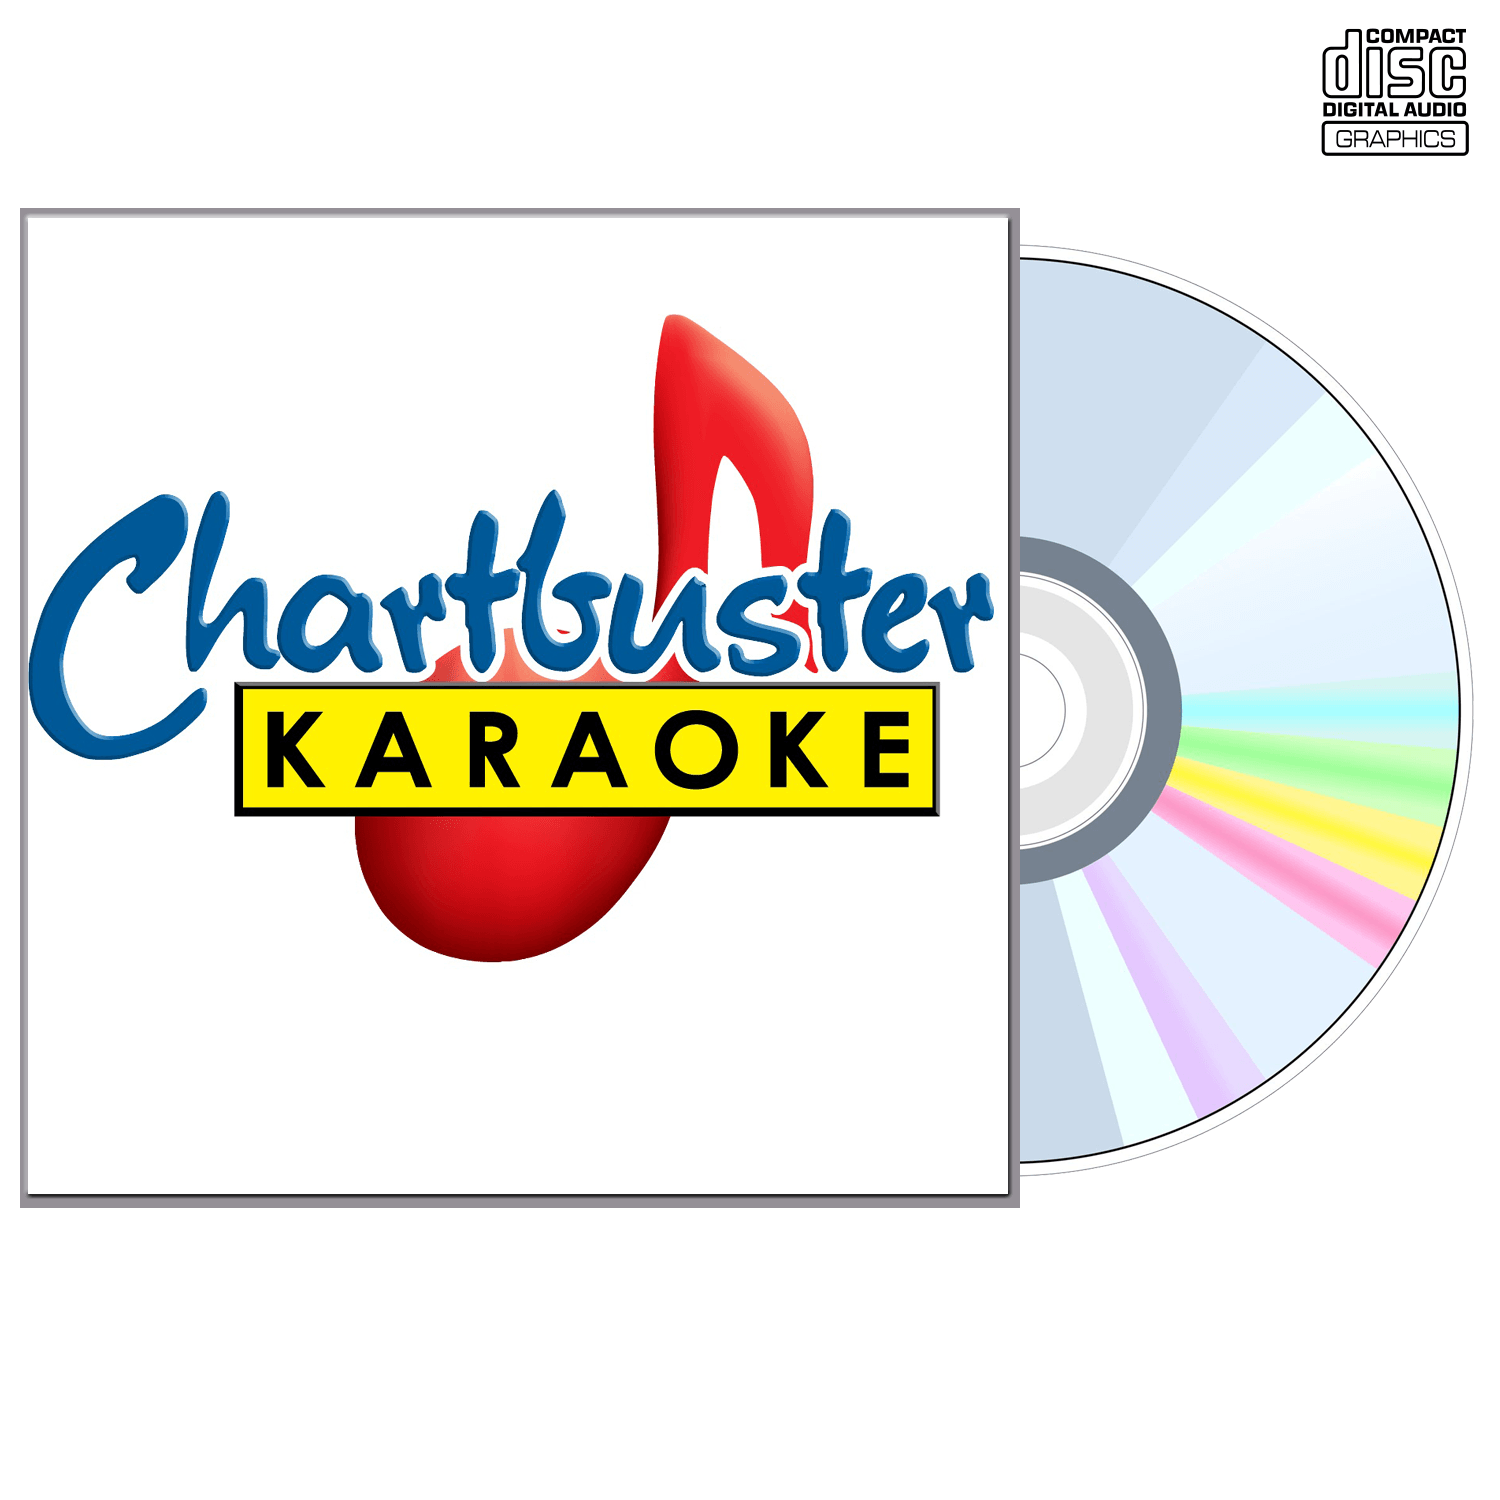 Kenny Chesney Vol 4 - CD+G - Chartbuster Karaoke - Karaoke Home Entertainment